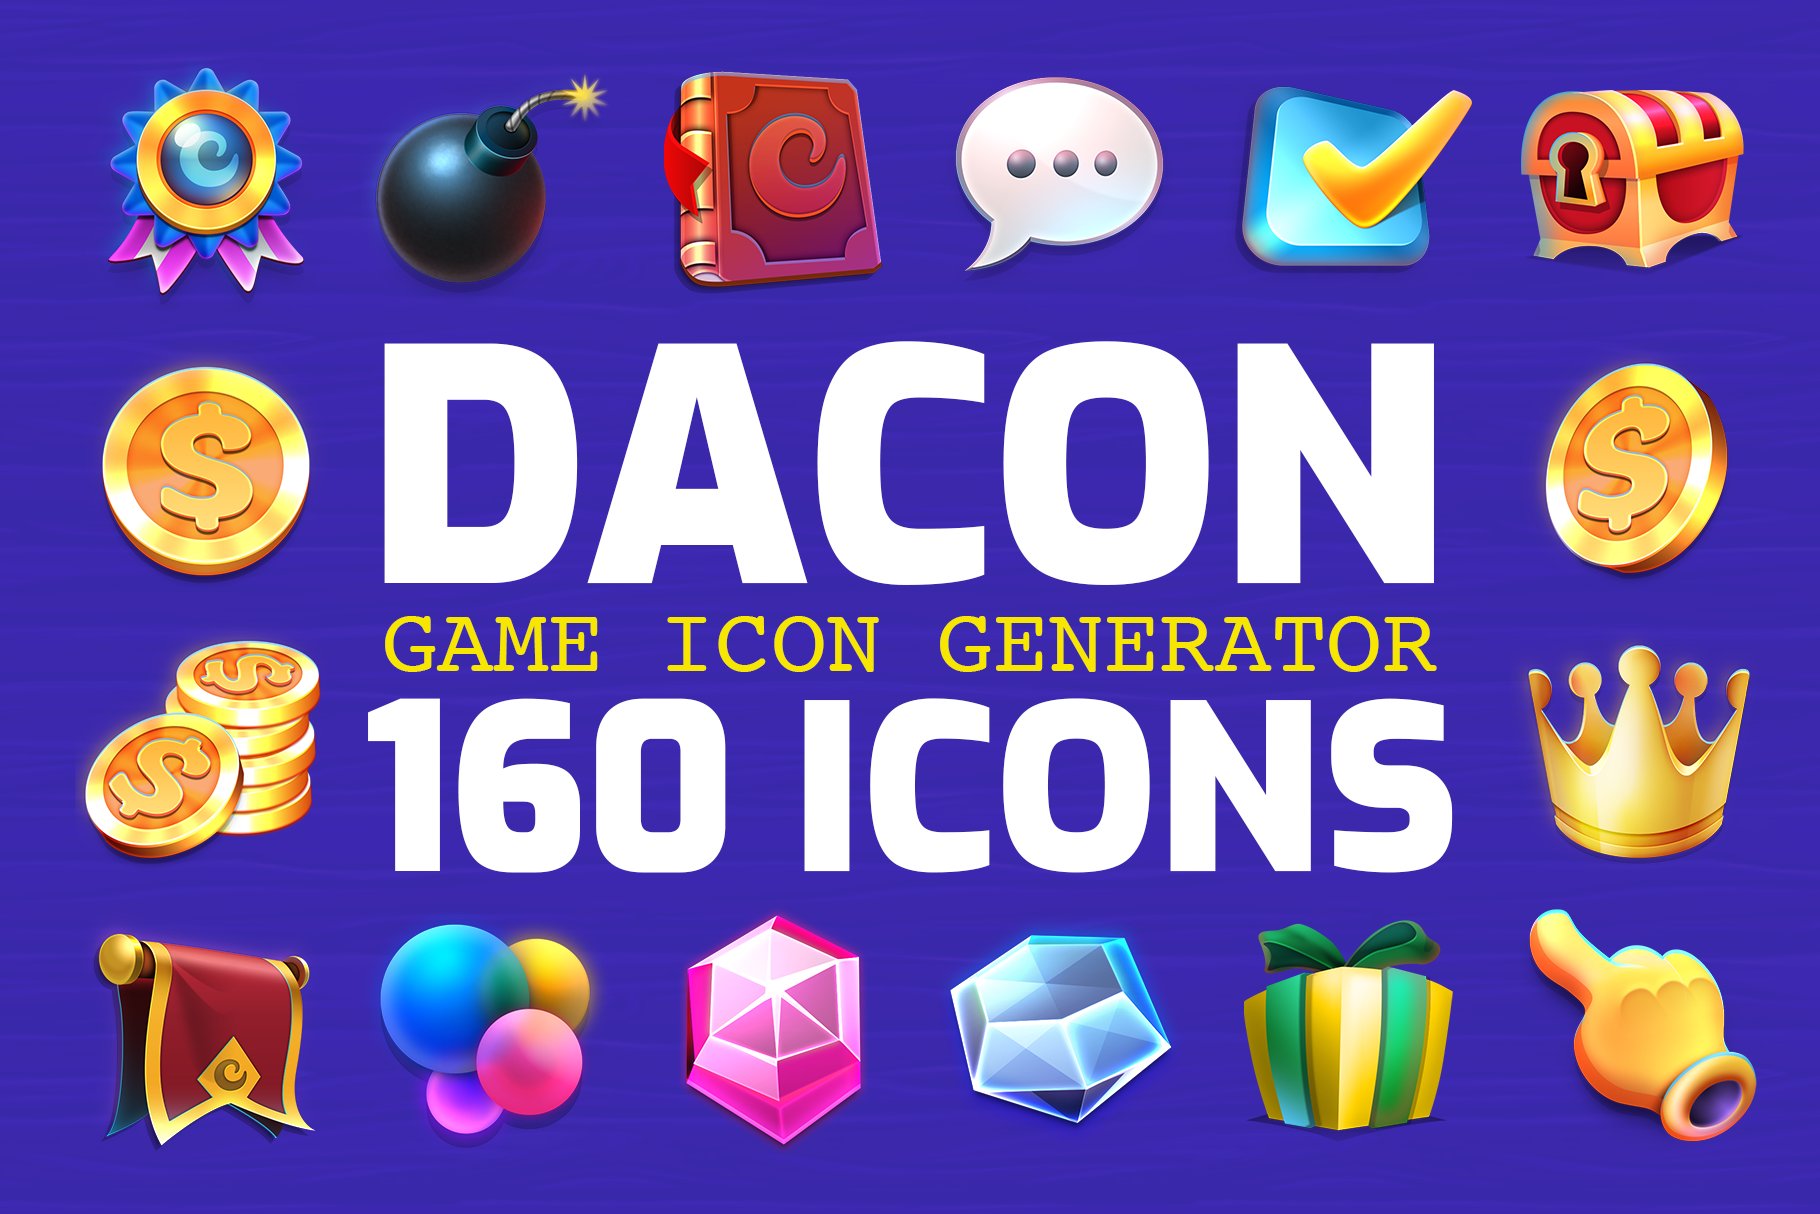 DACON - Game Icon Generator cover image.